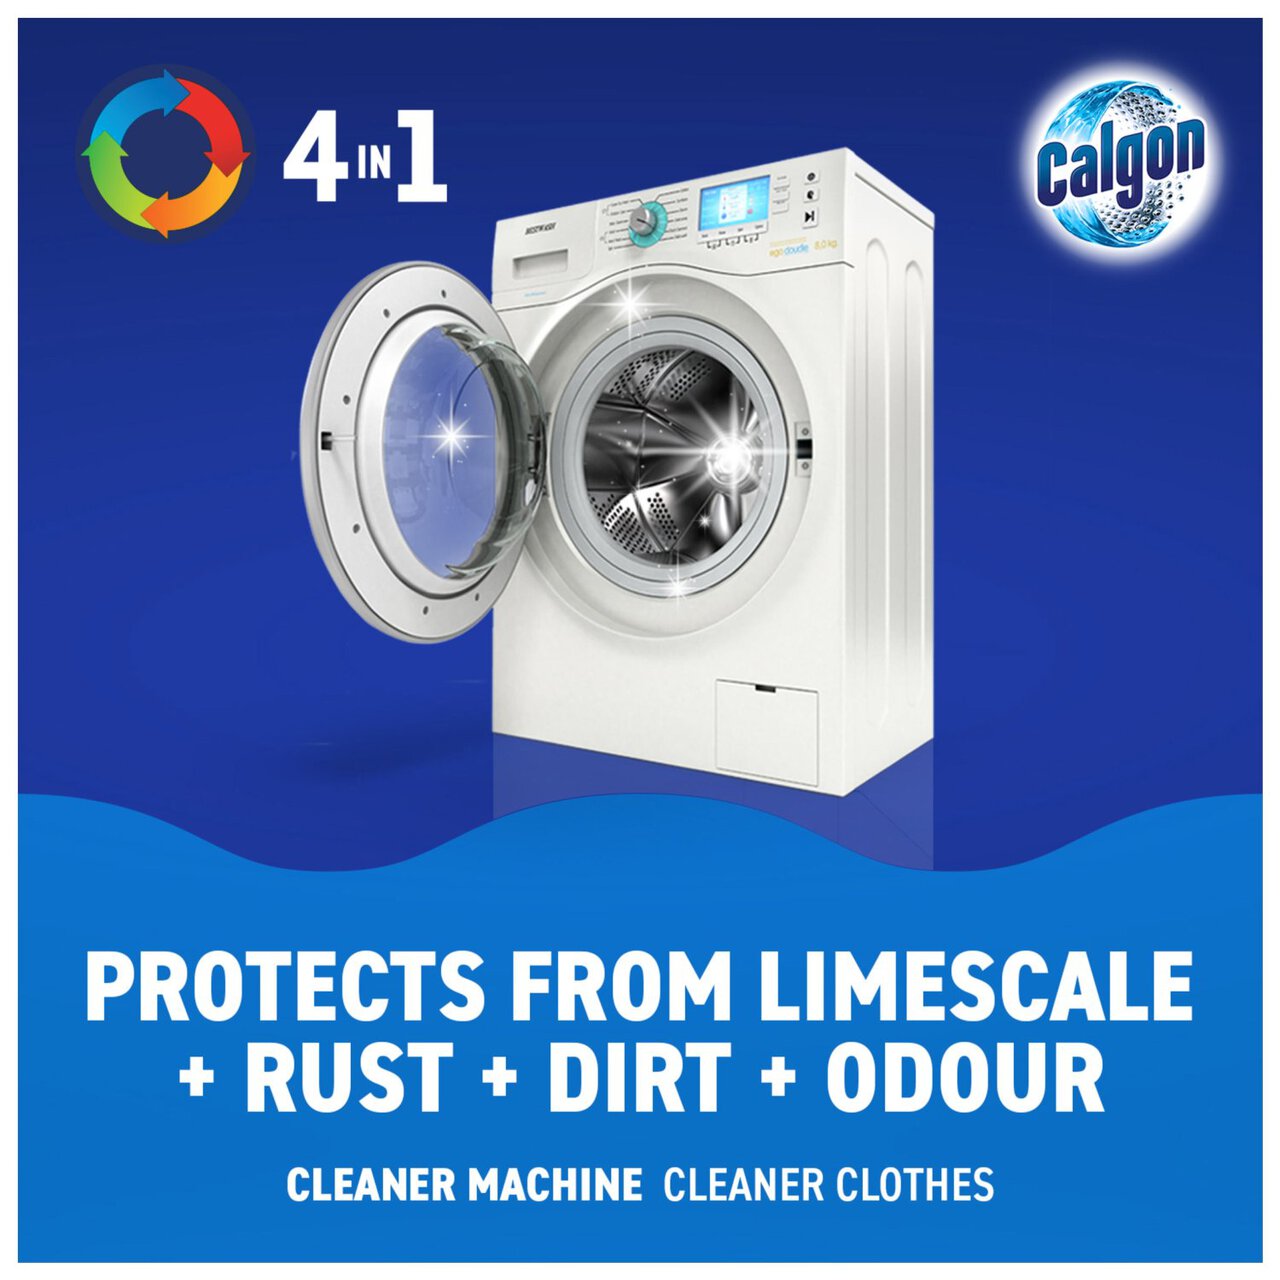 Calgon 4-in-1 Washing Machine Water Softener Gel 750ml